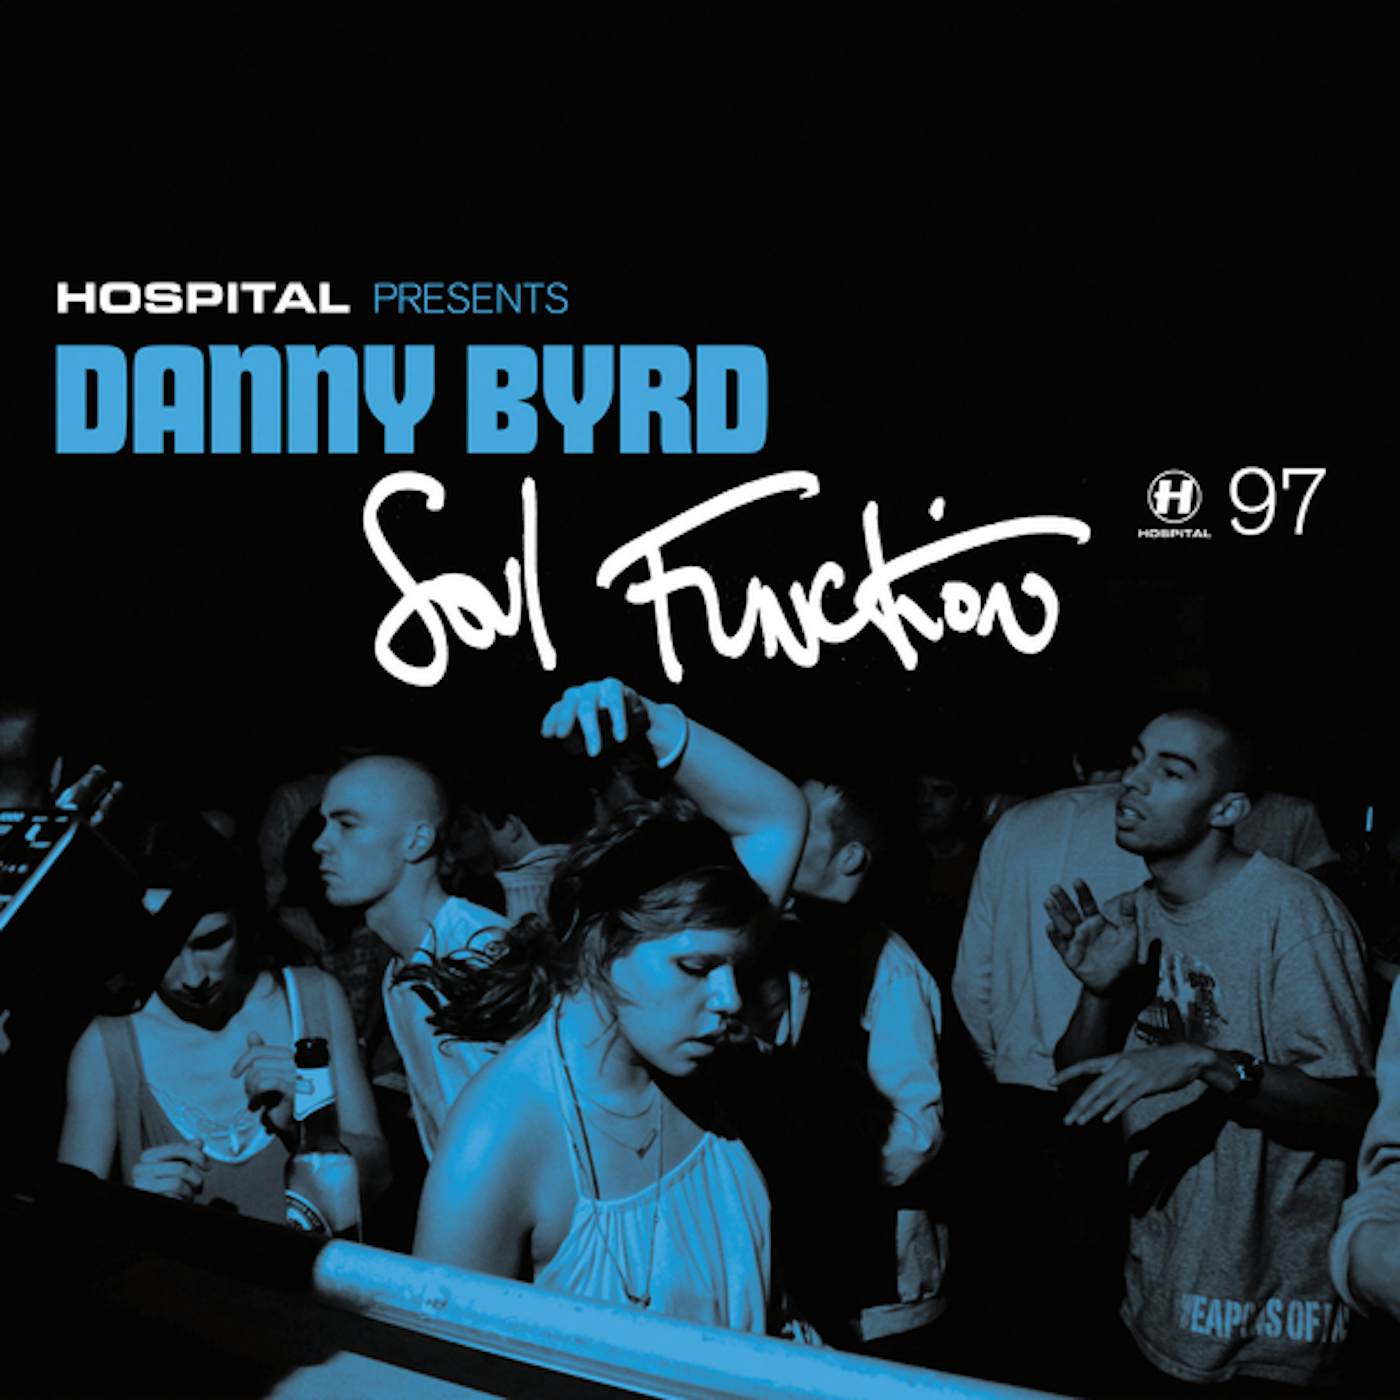 Danny Byrd Soul Function